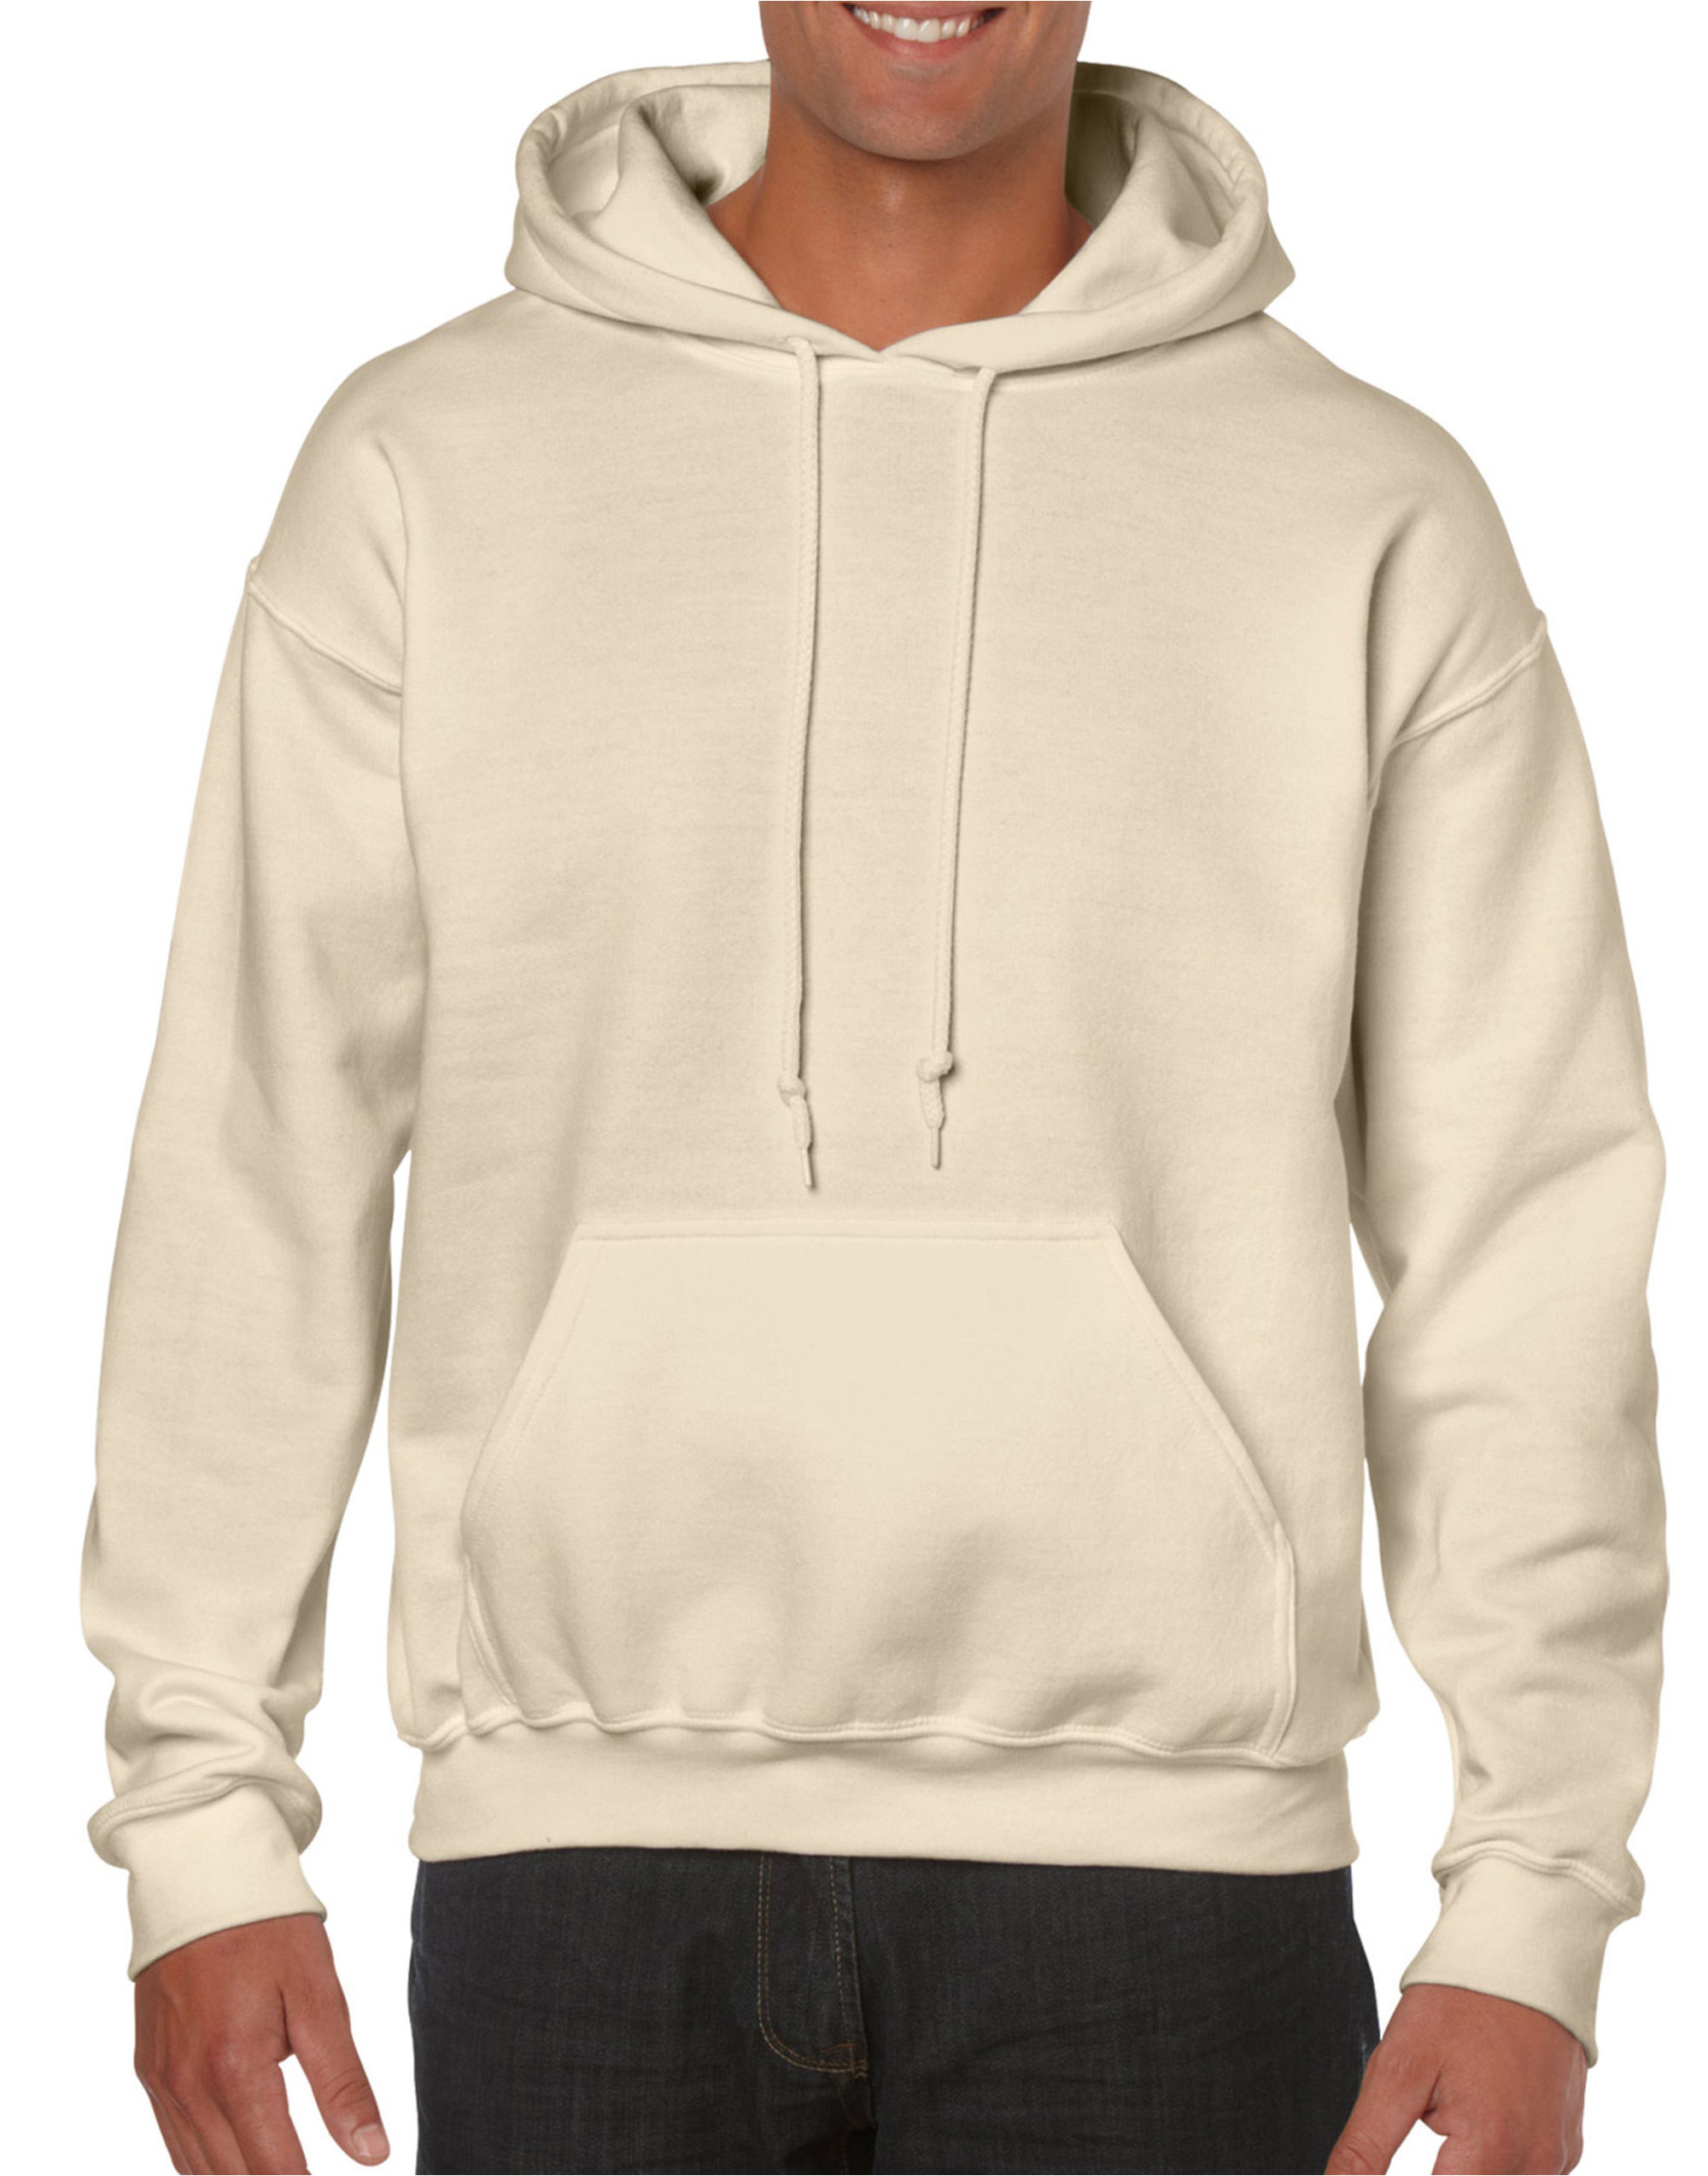 Heavy Blend  Adult Hooded Sweatshirt